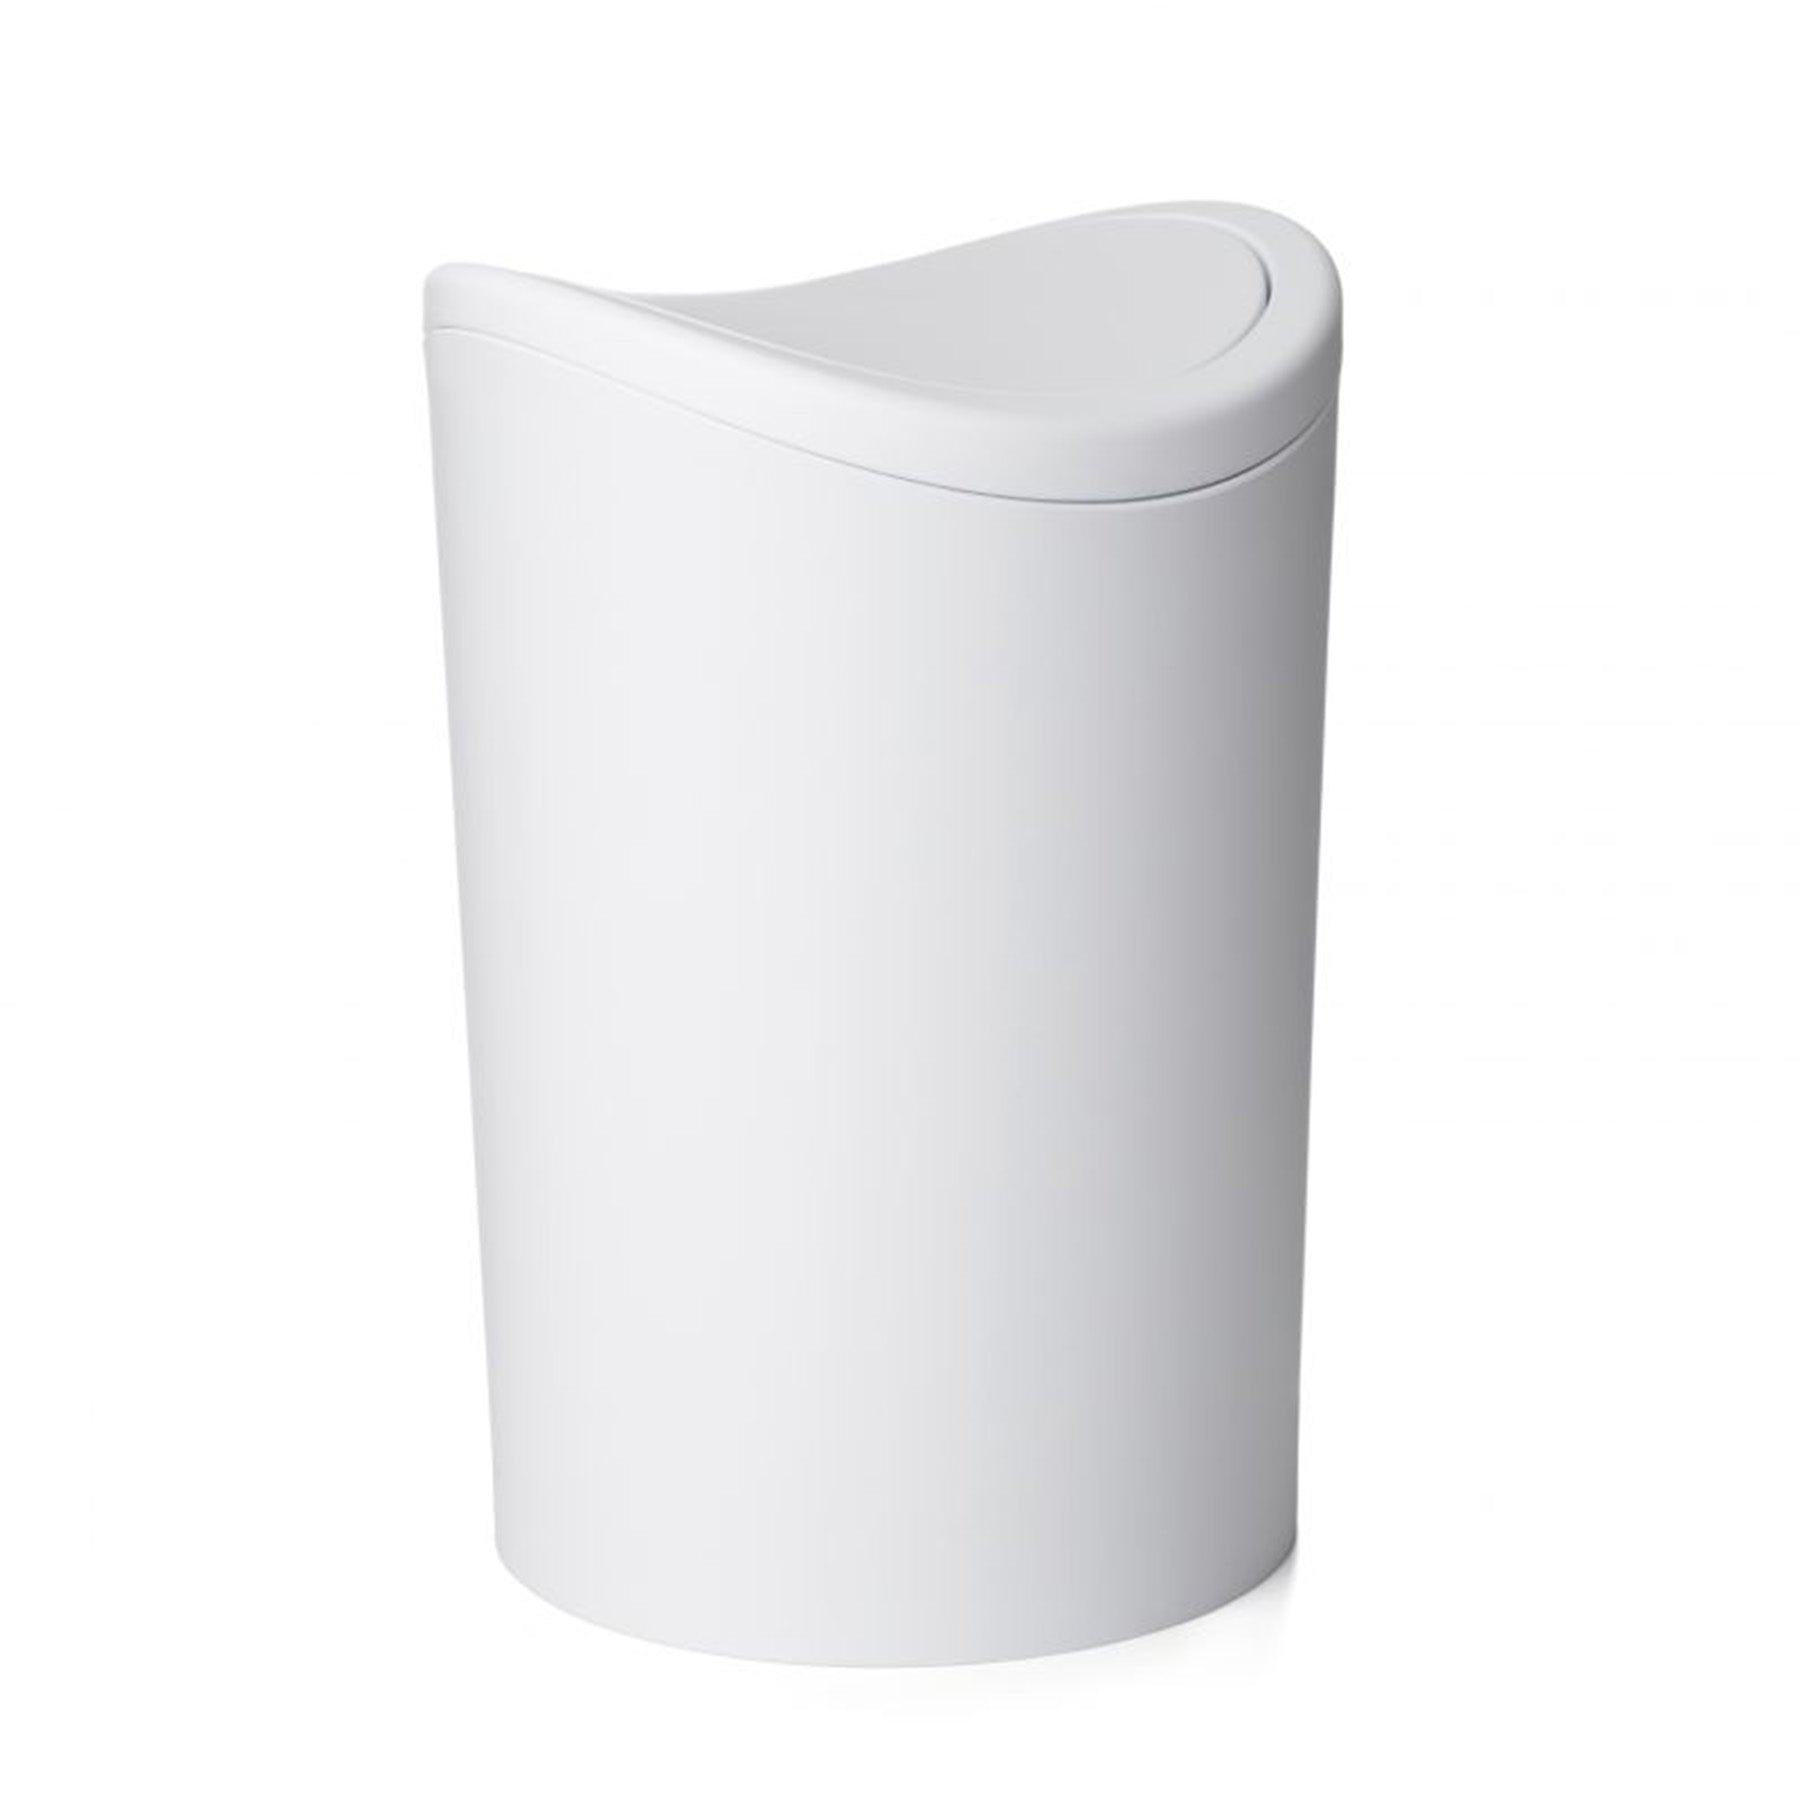 Dustbin with swing lid, White